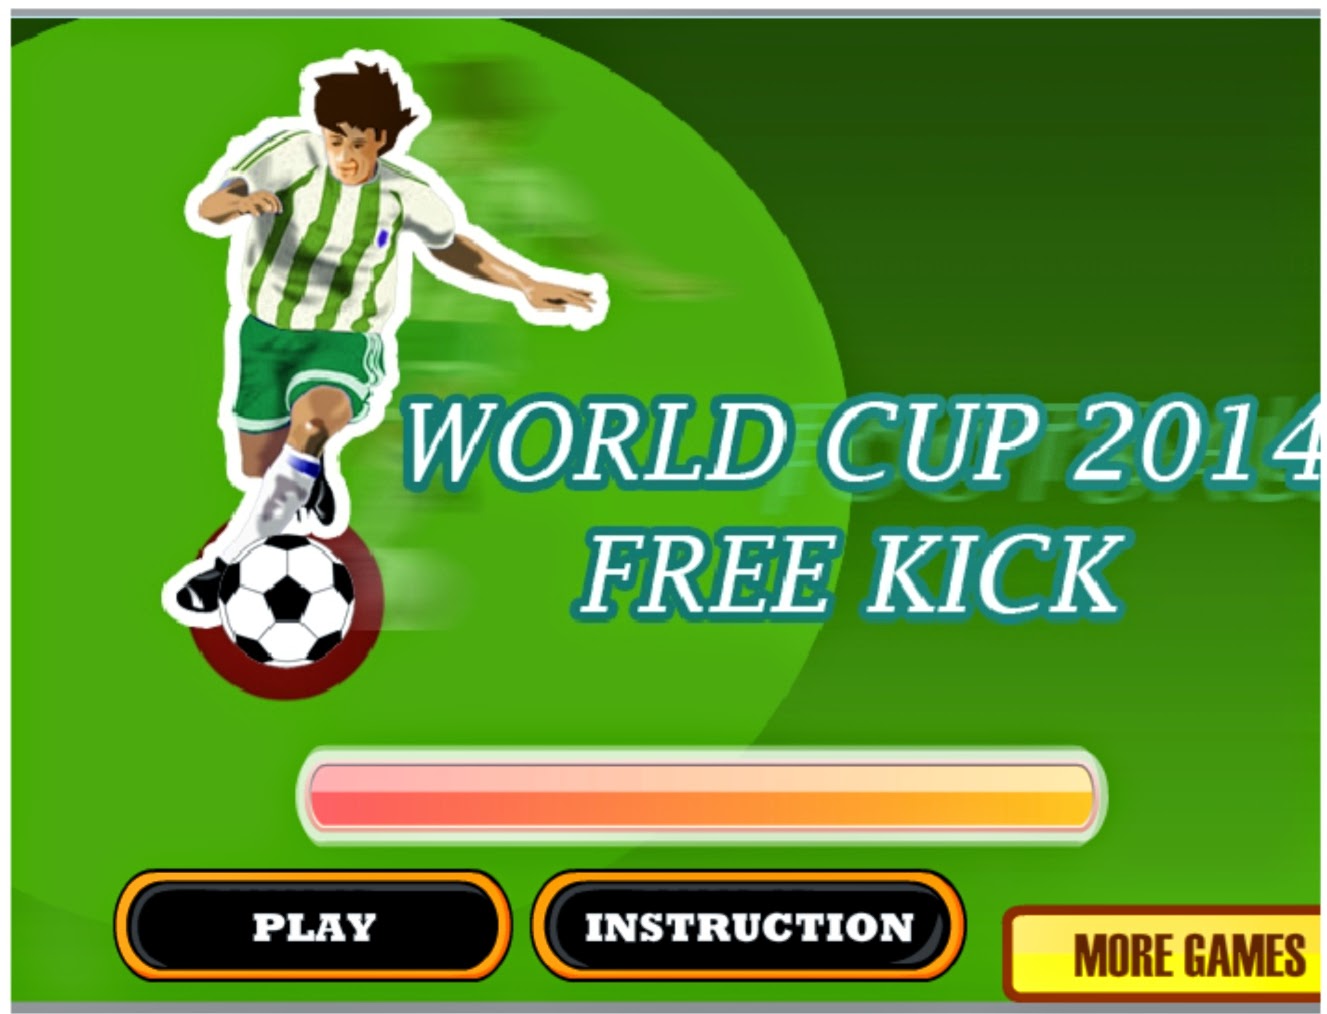 World Cup 2014 Free Kick